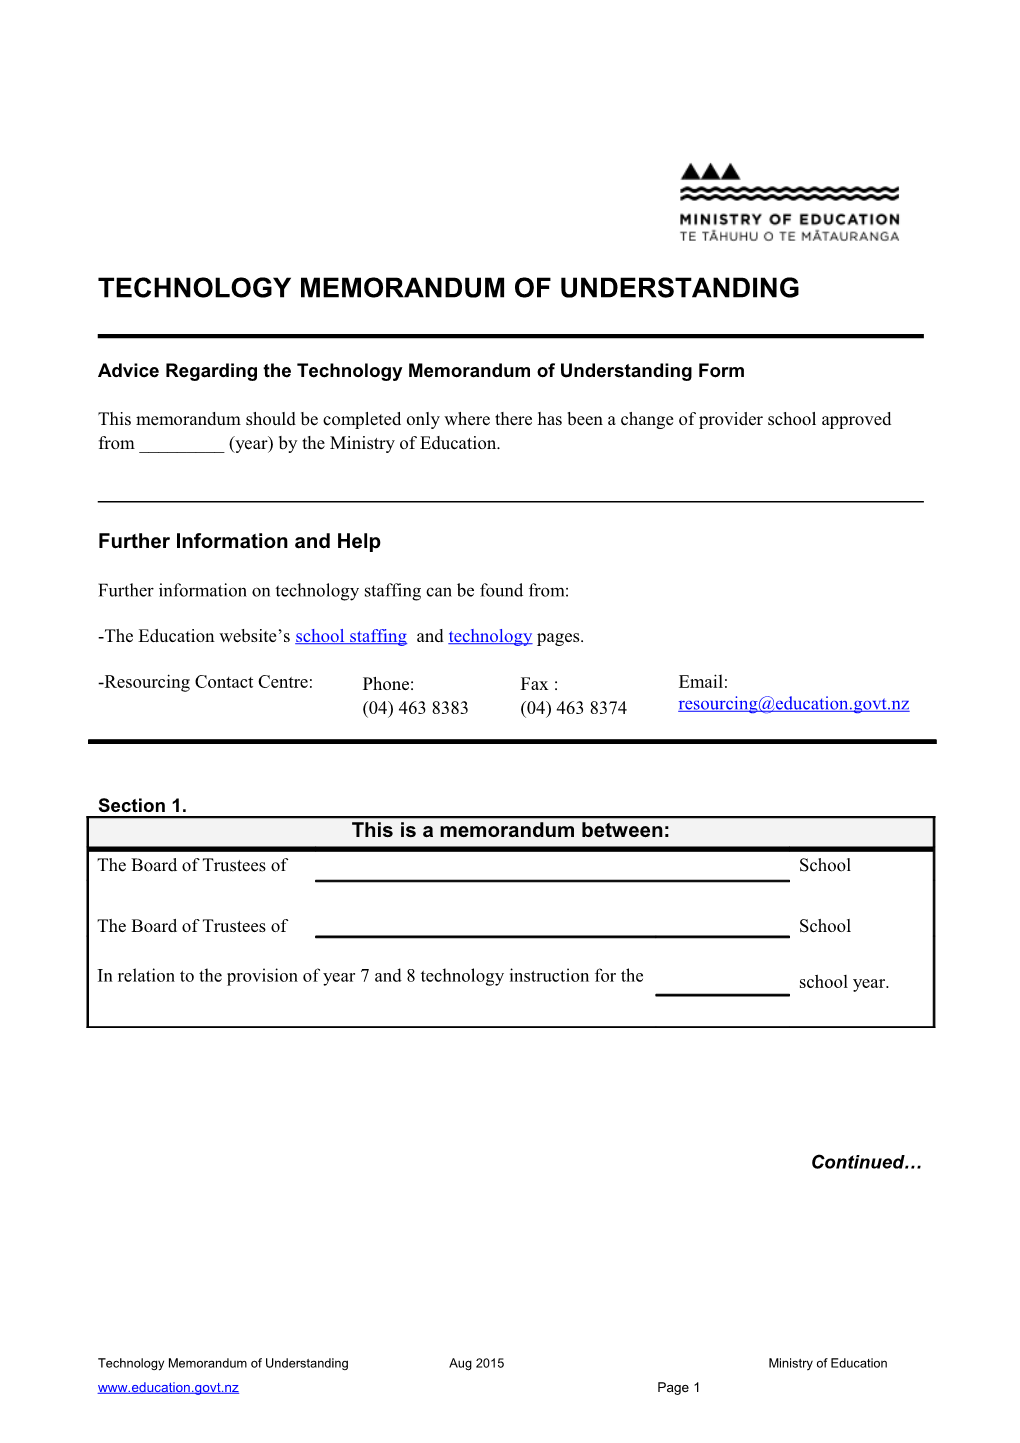 Technology Memorandum of Understanding